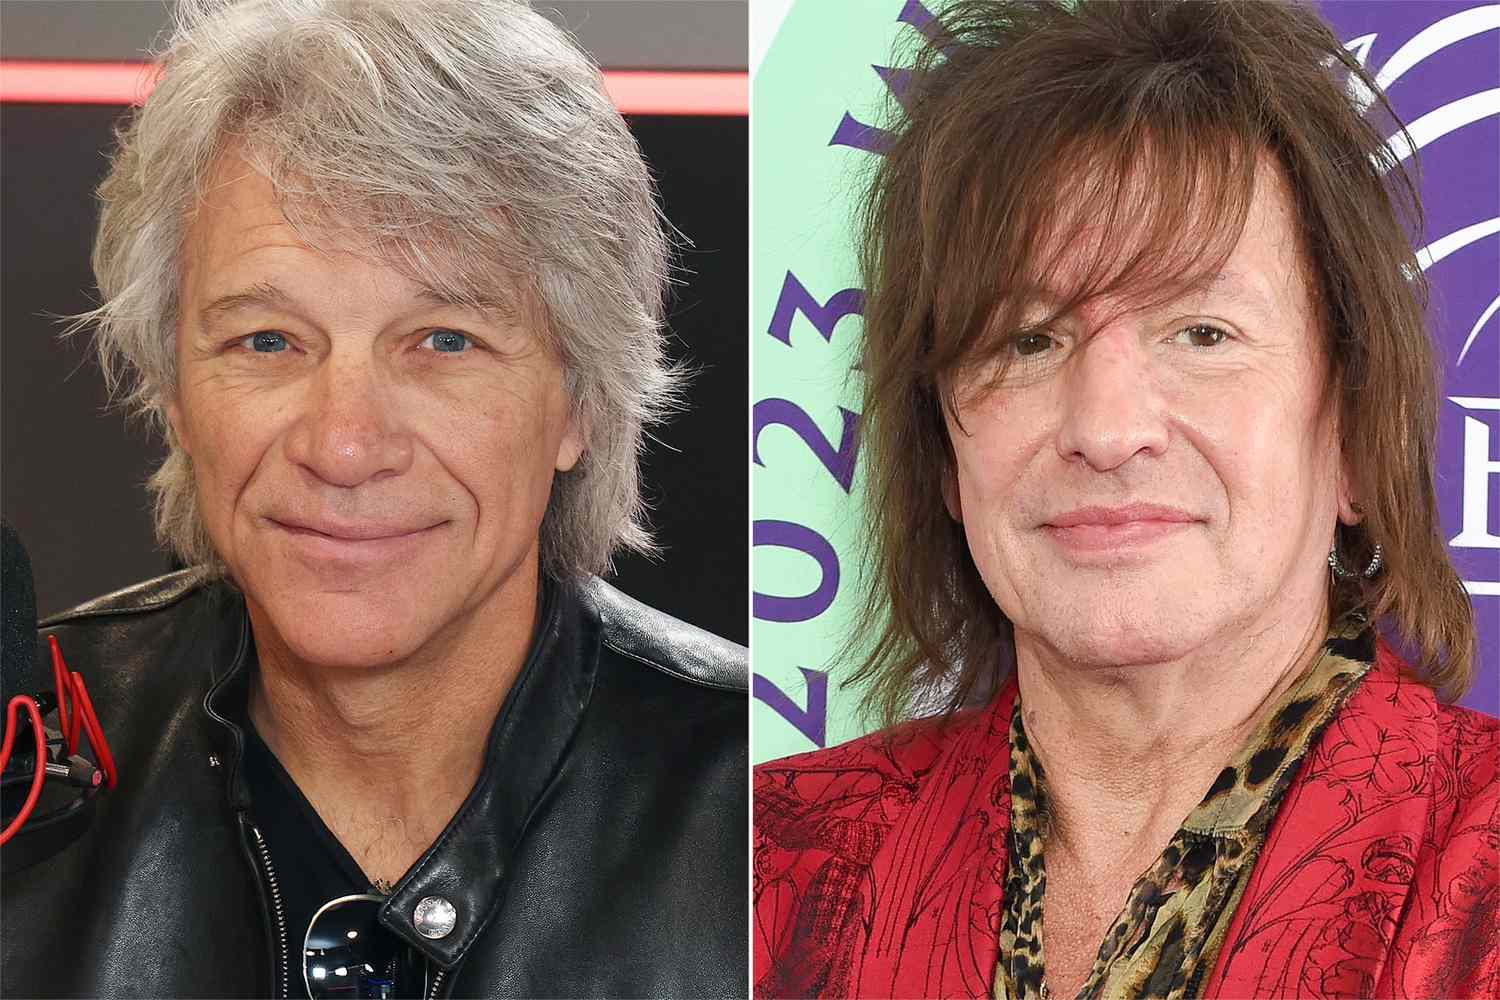 Jon Bon Jovi addresses Richie Sambora possibly returning to Bon Jovi: 'The band goes on, you know?'